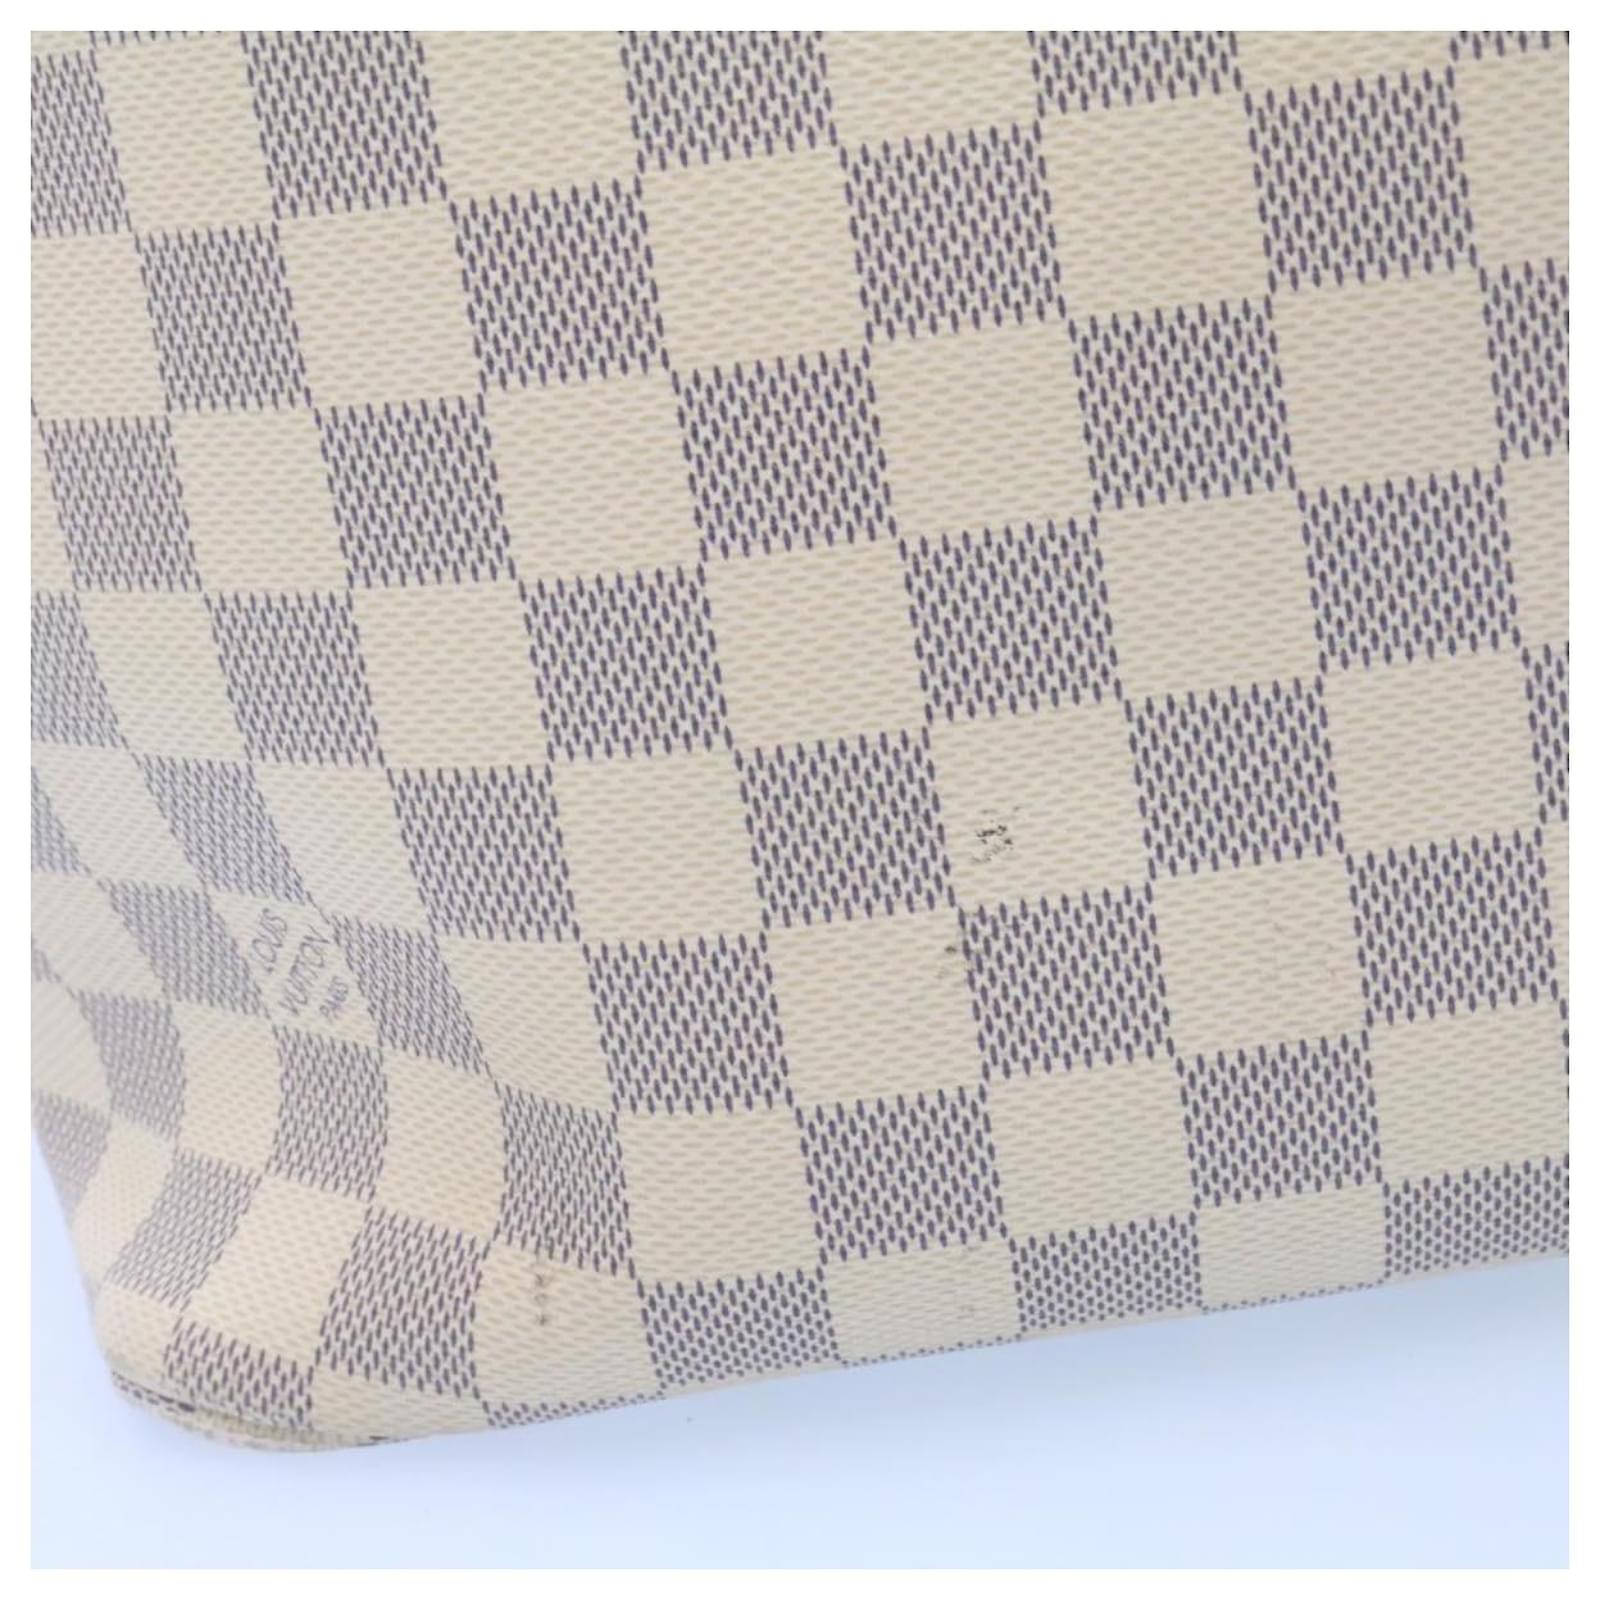 N41449 Louis Vuitton Monogram Damier Azur Calvi Handbag